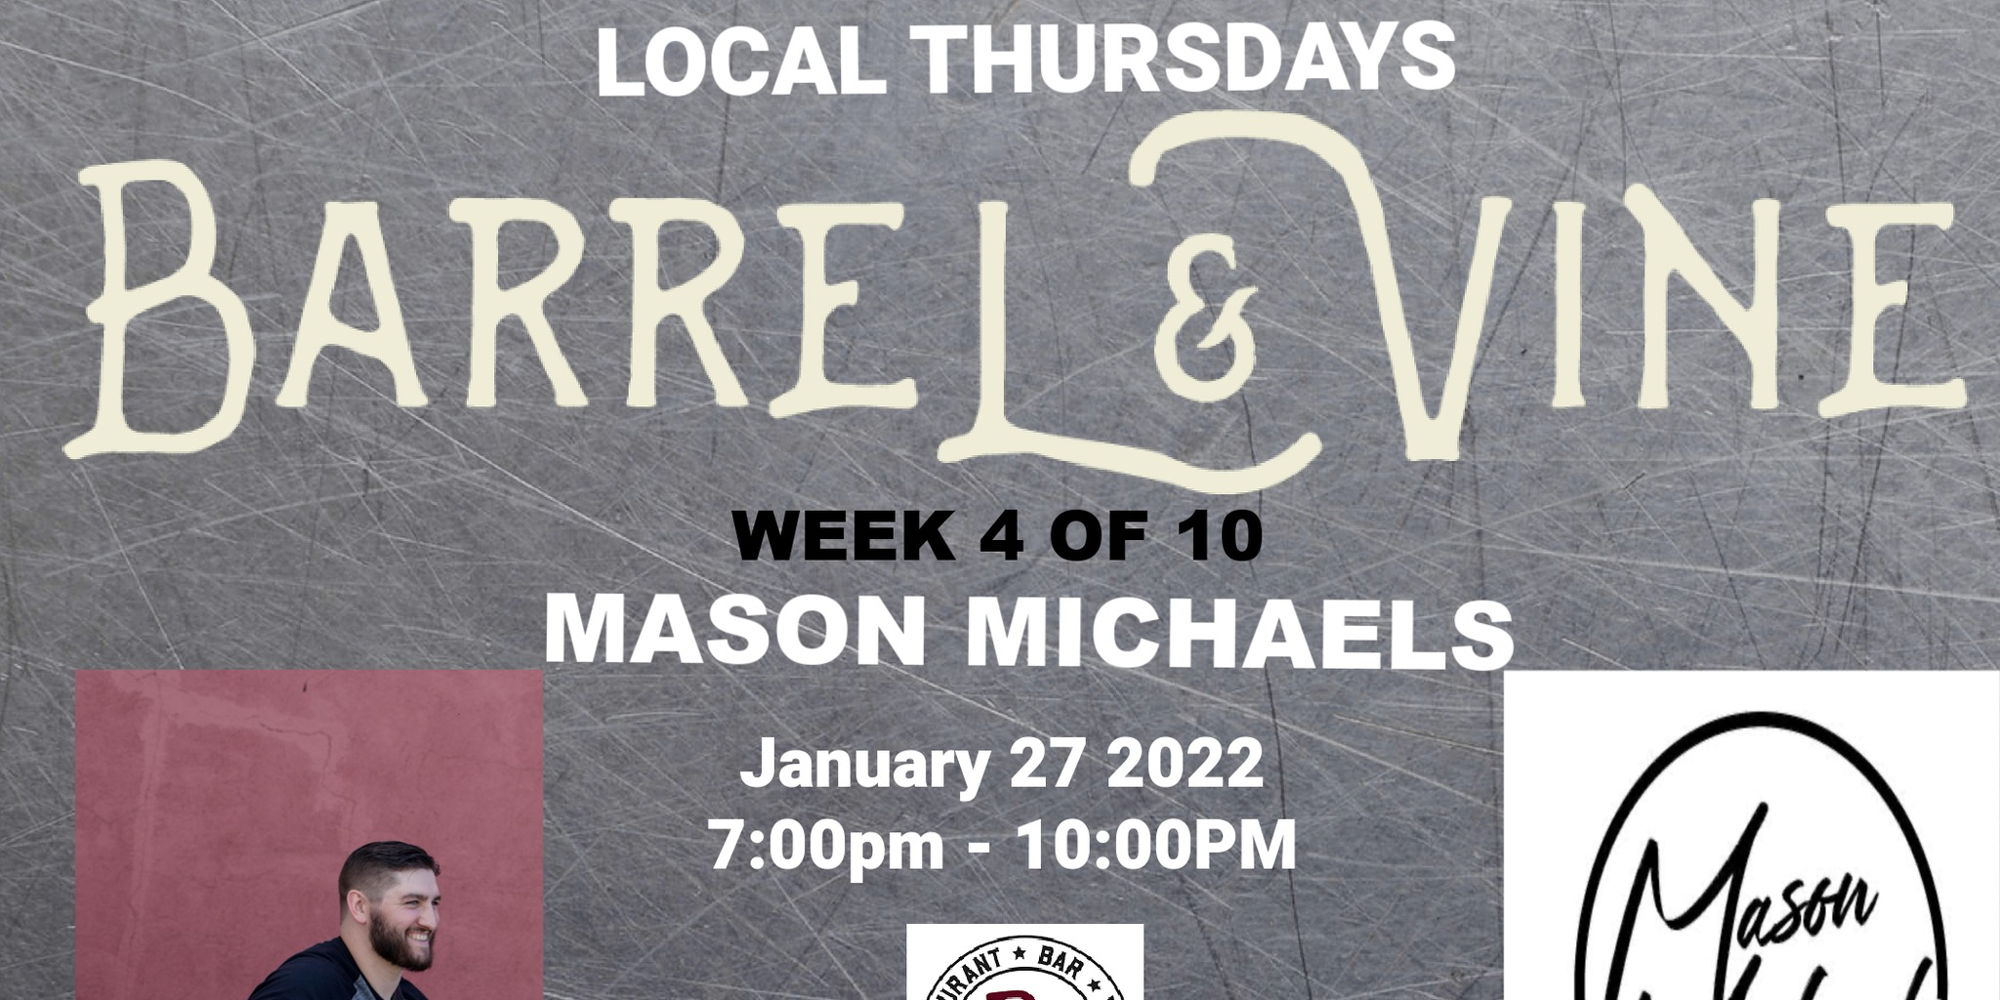 Local Thursday @ B&V - Mason Michaels! promotional image